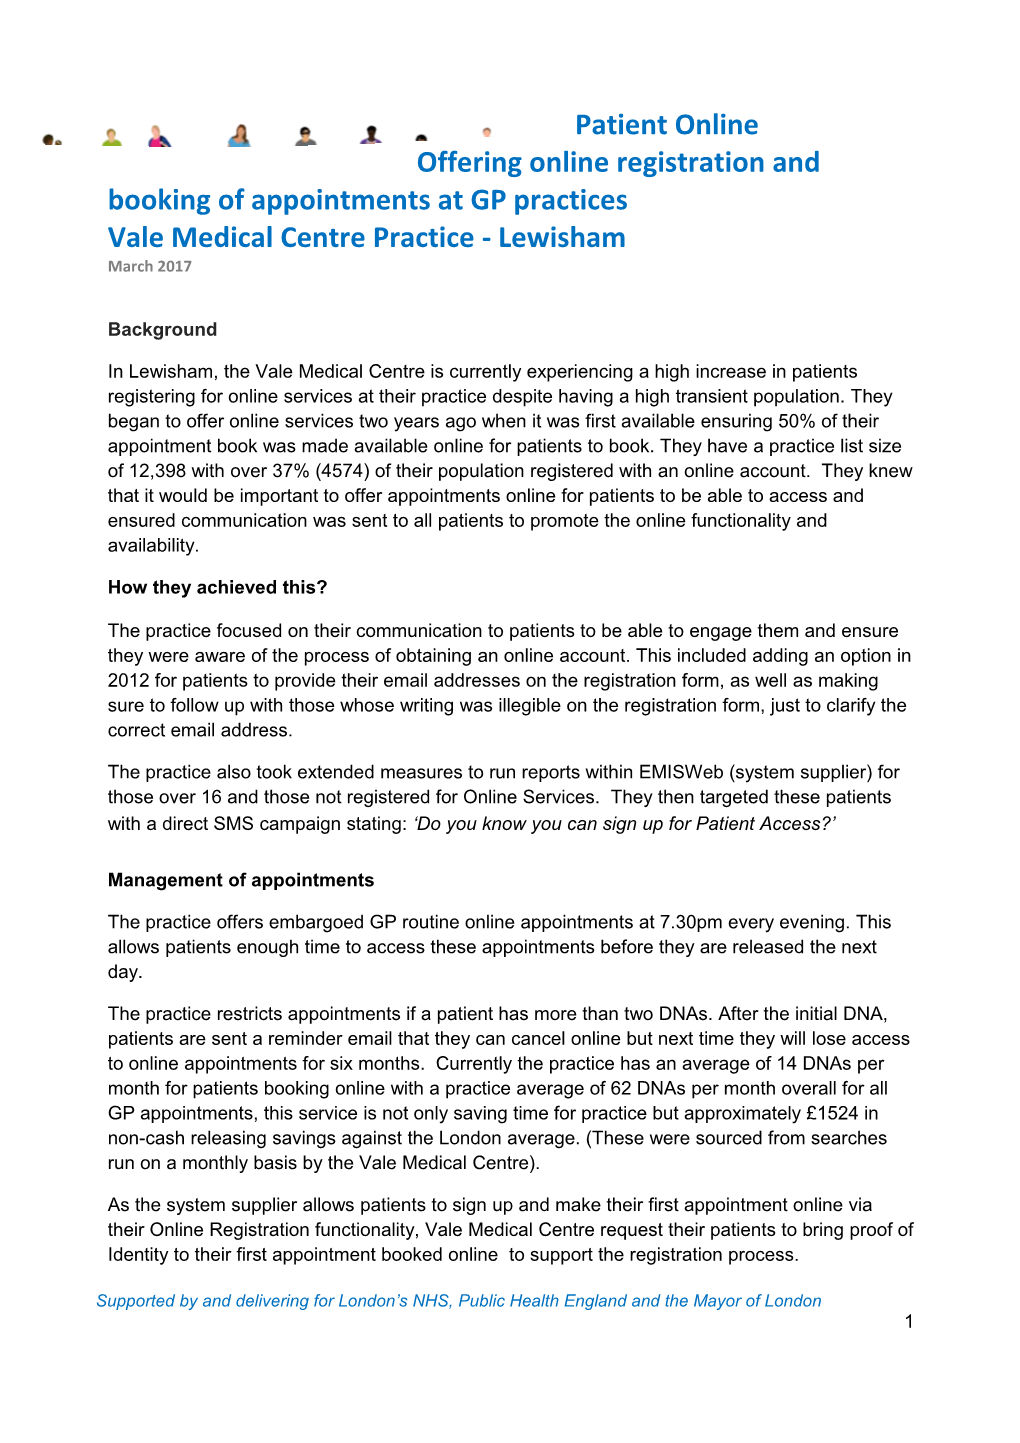 Vale Medical Centre Practice Case Study. Final14.08.17